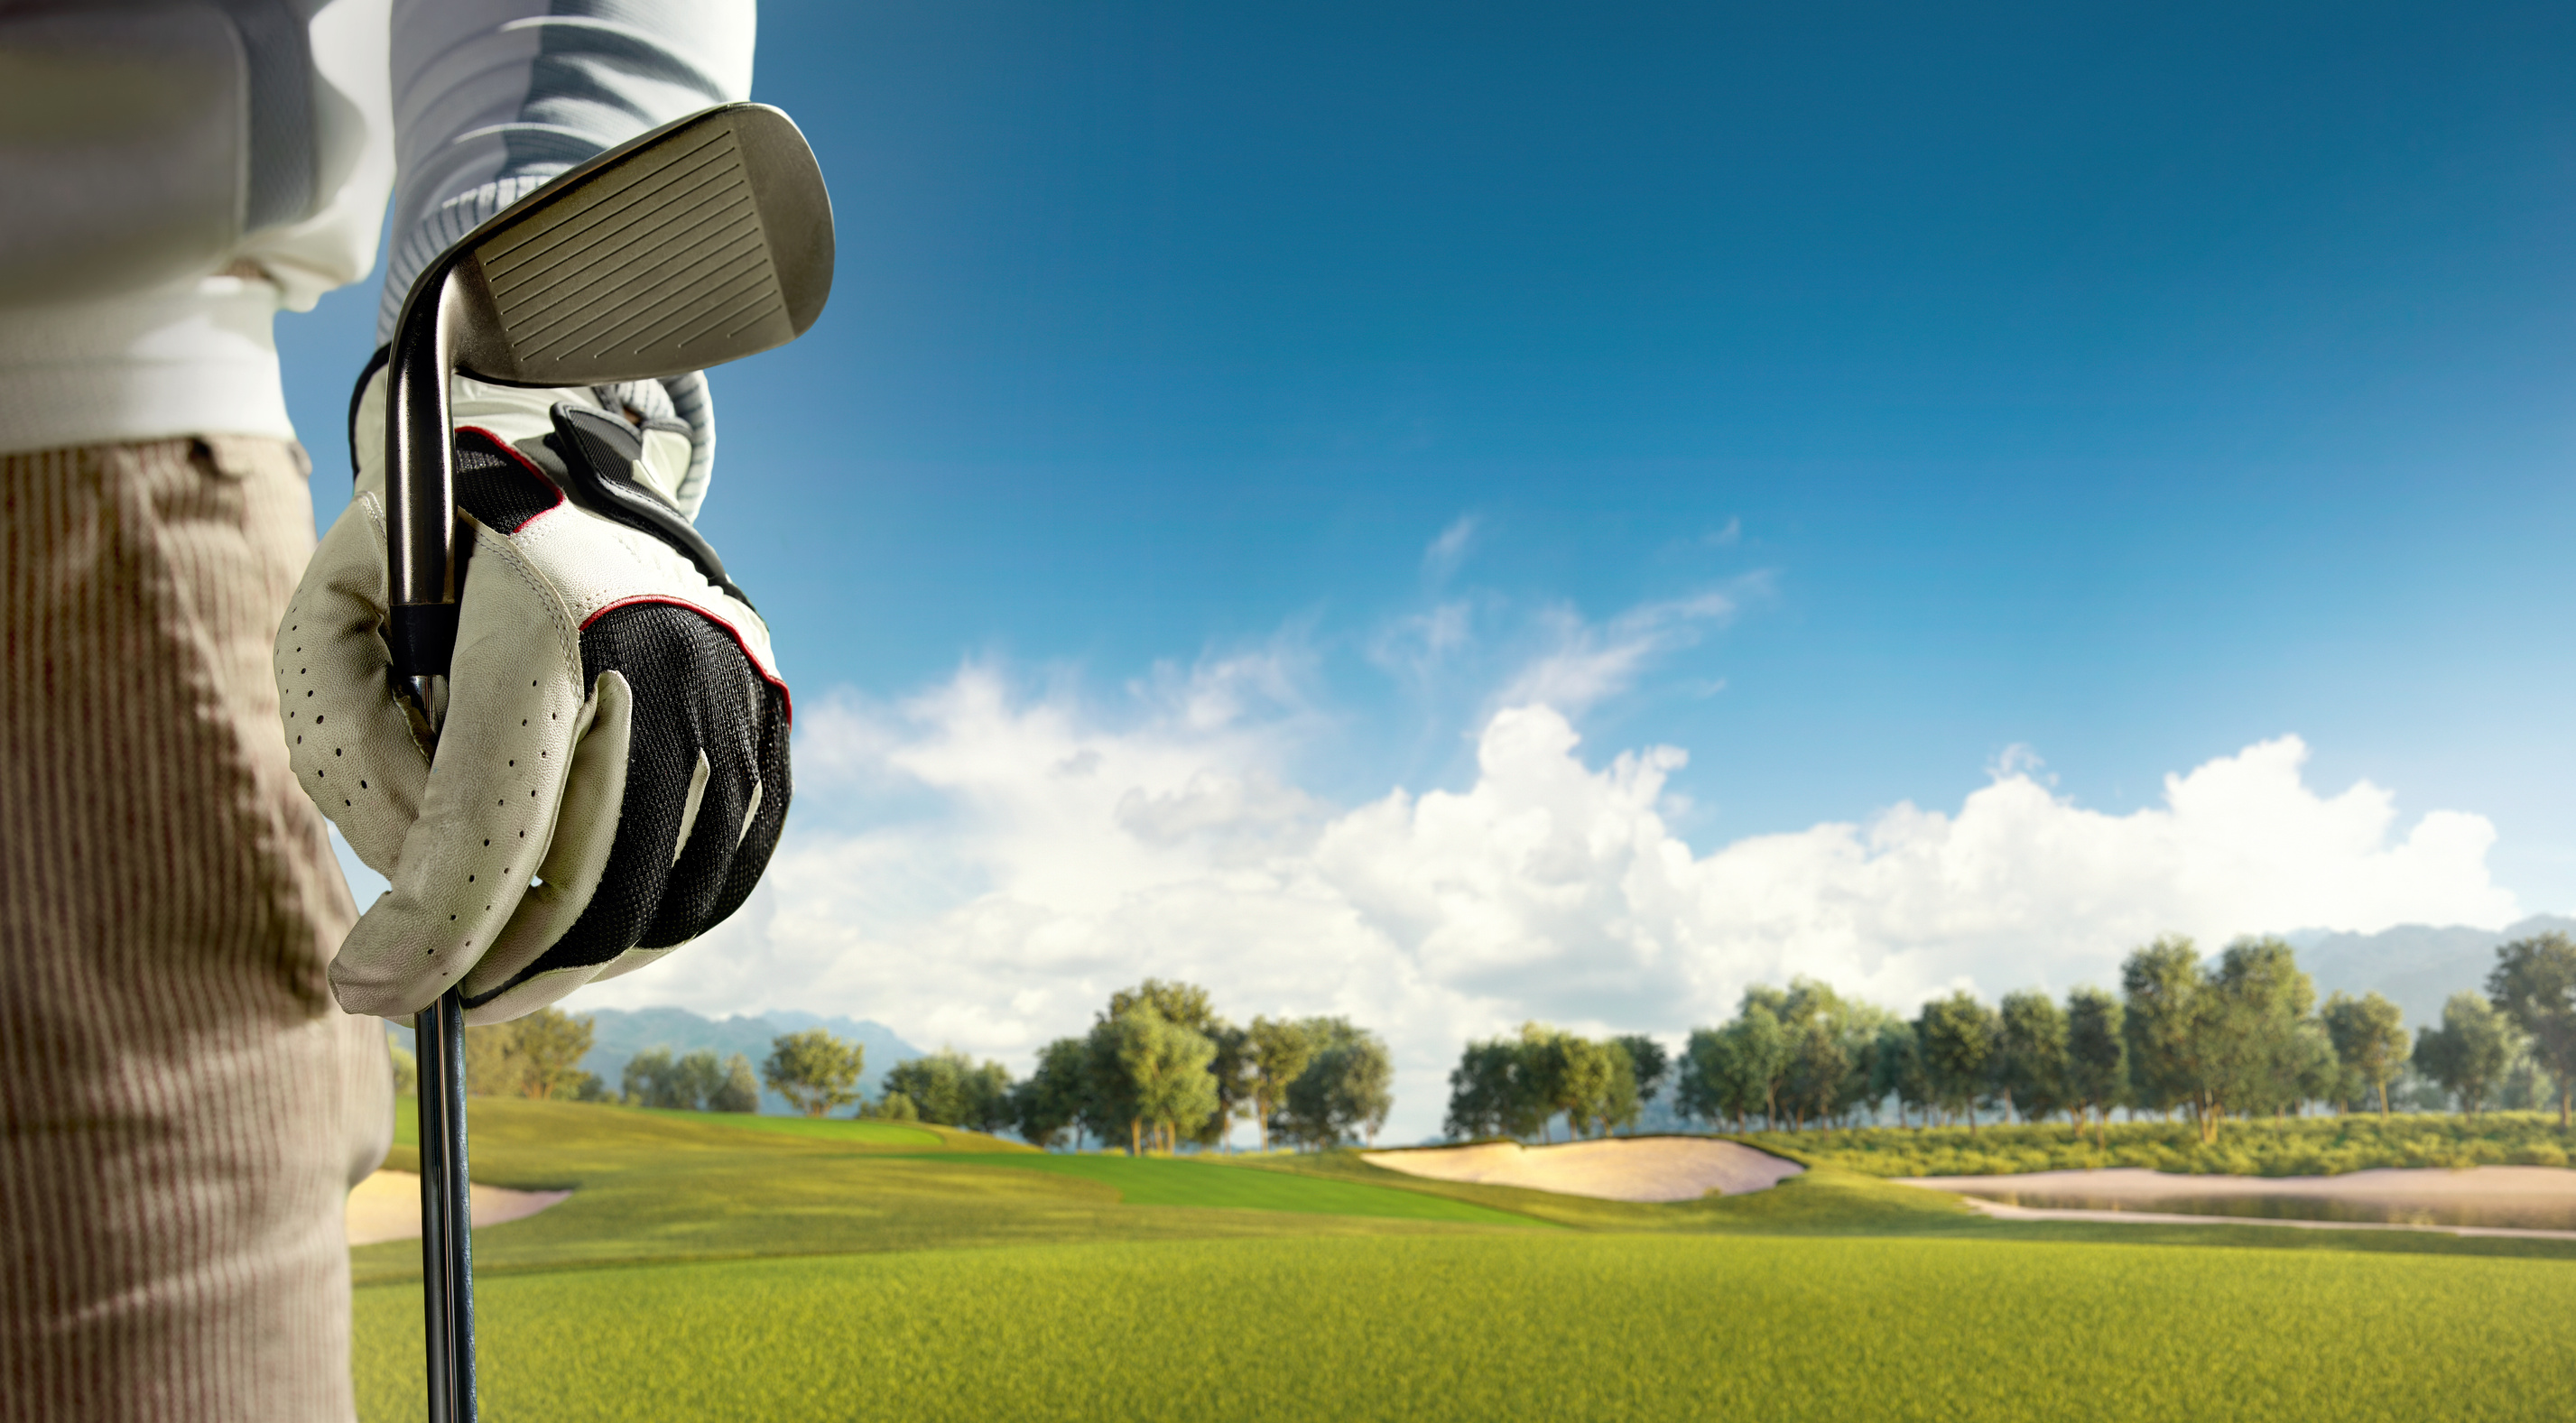 Golf: Golf course with a golf bag